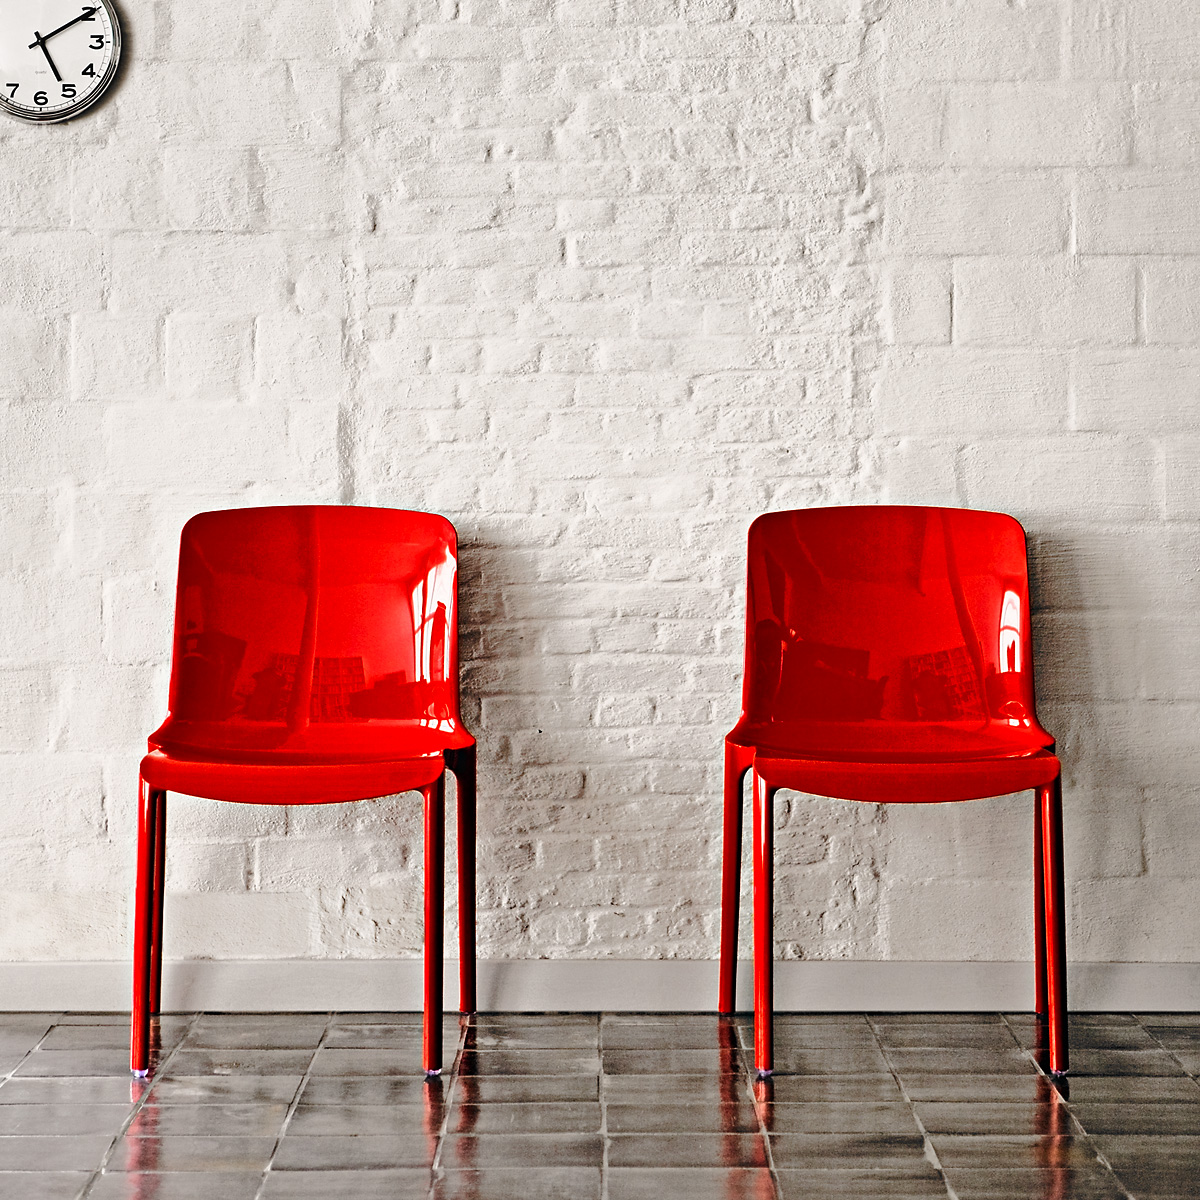 ghent_interior-red_chairs-stephen-austin-welch-director-photographer